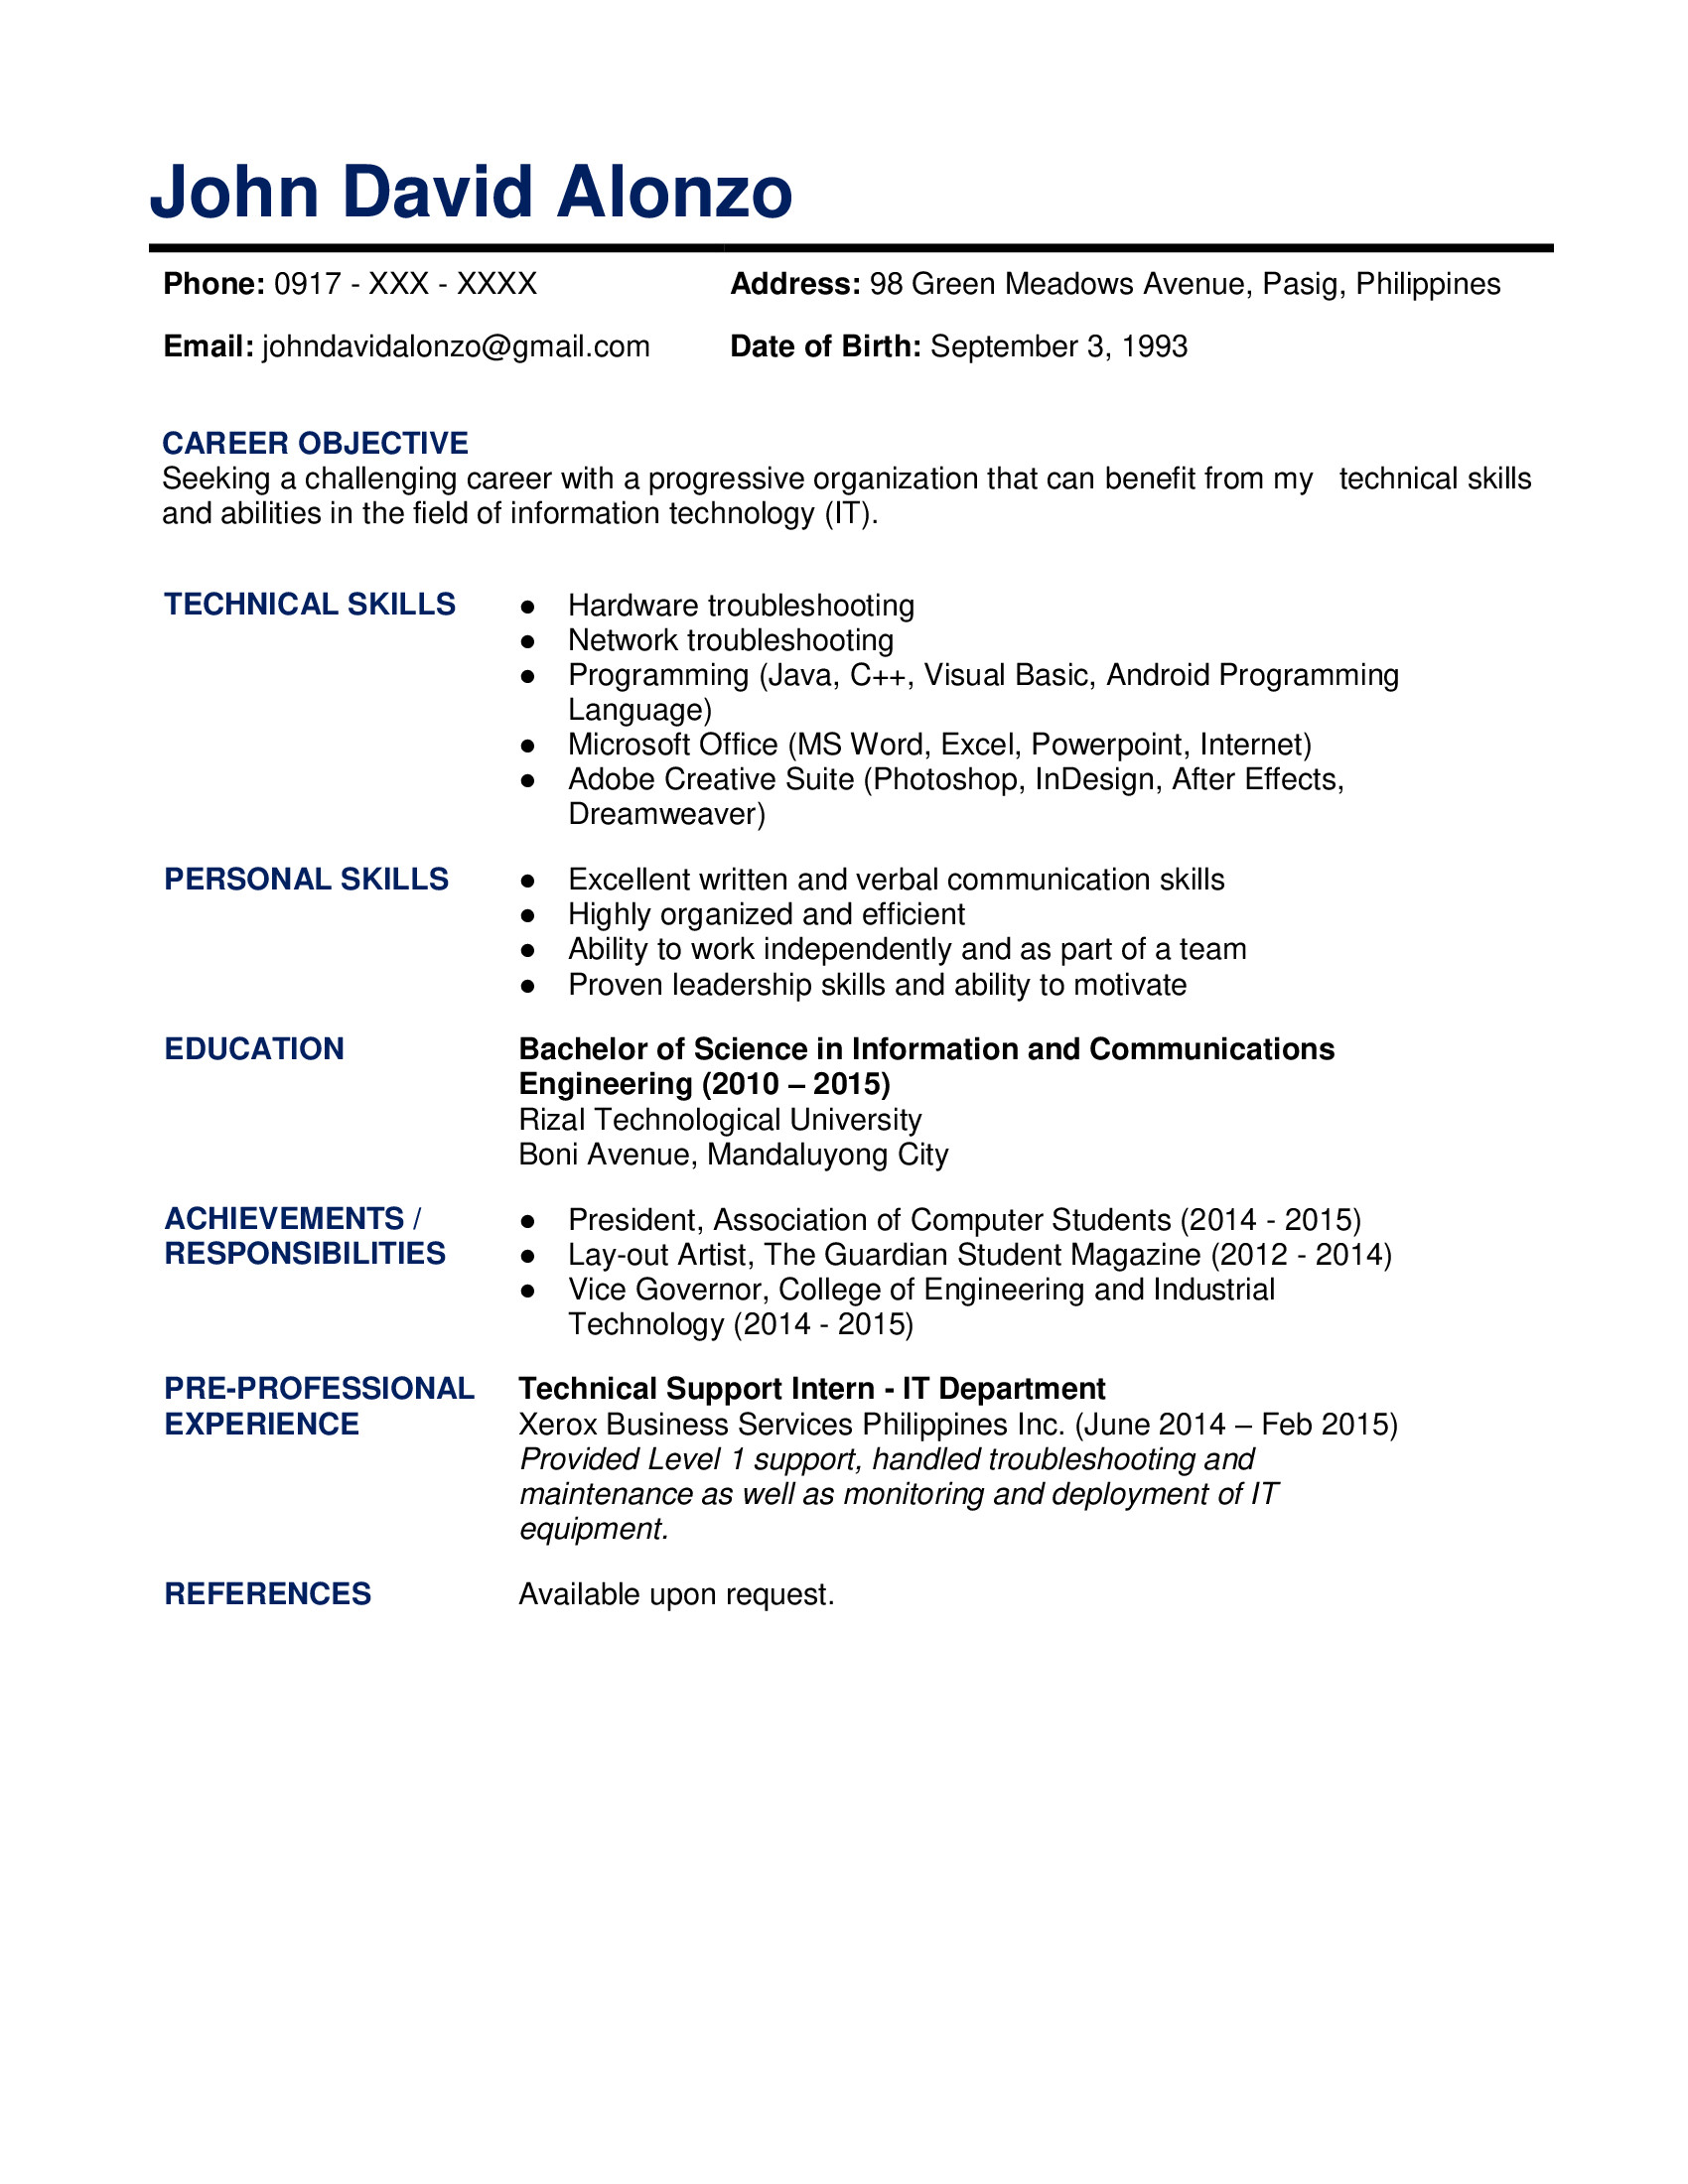 Sample Resume for Business Administration Fresh Graduate Philippines Sample Resume formats for Fresh Graduates